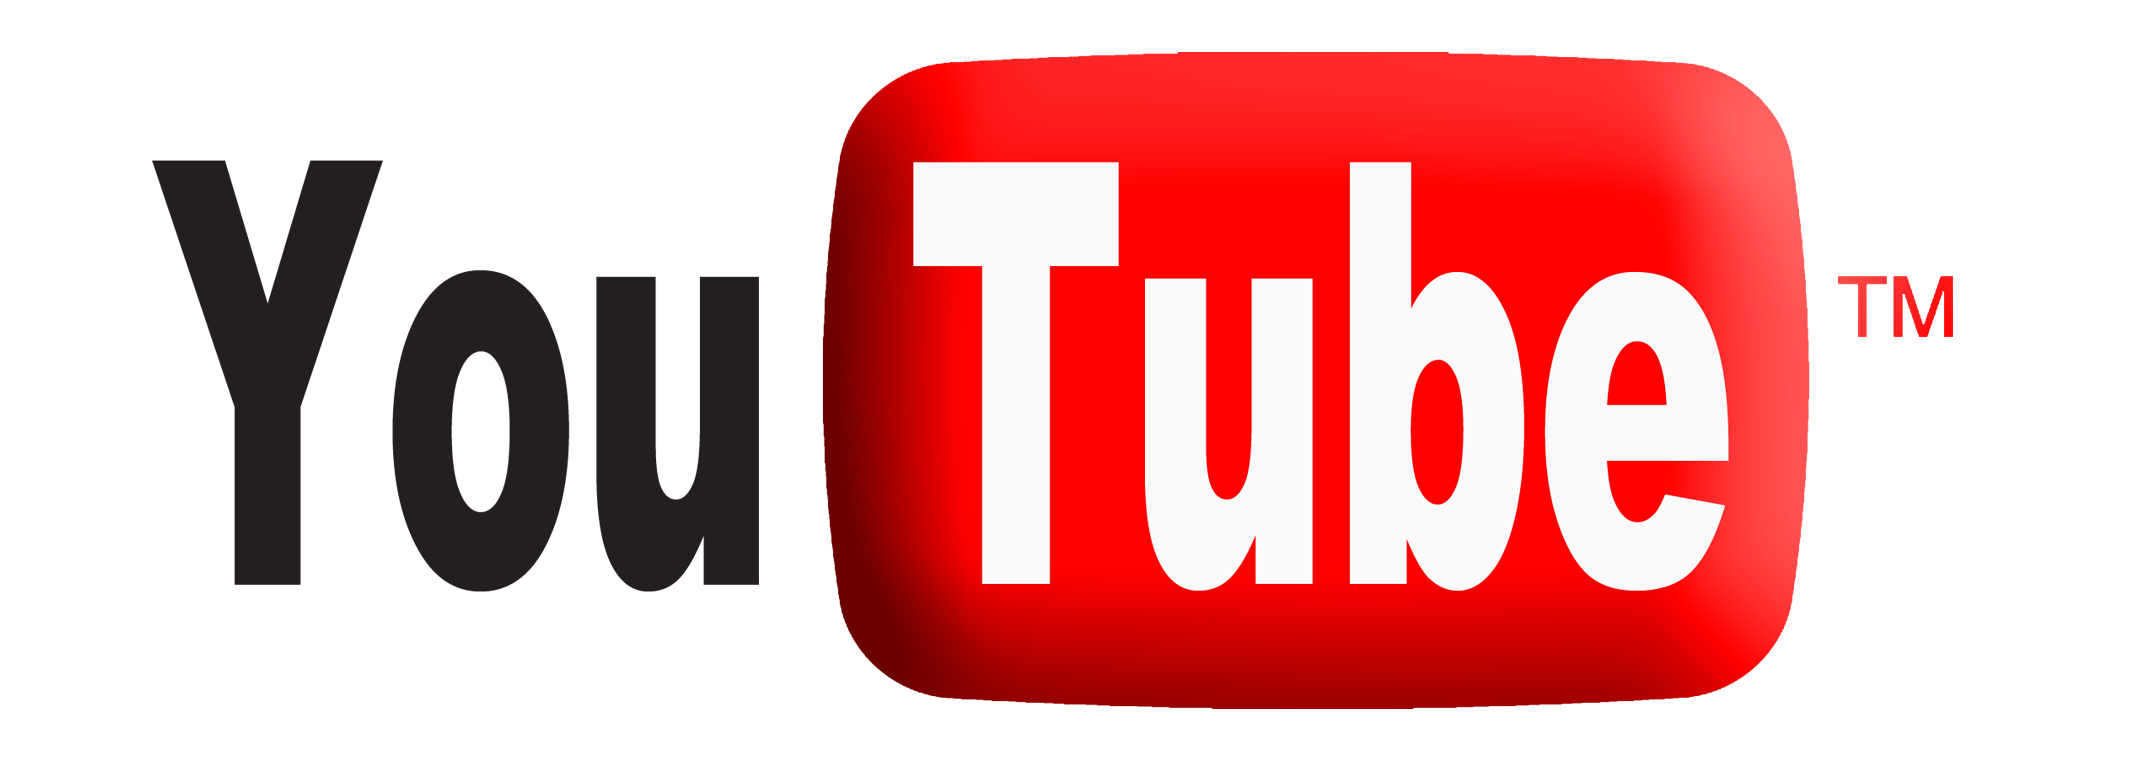 YouTube Original Channel Initiative Logo Advertising - Youtube logo PNG